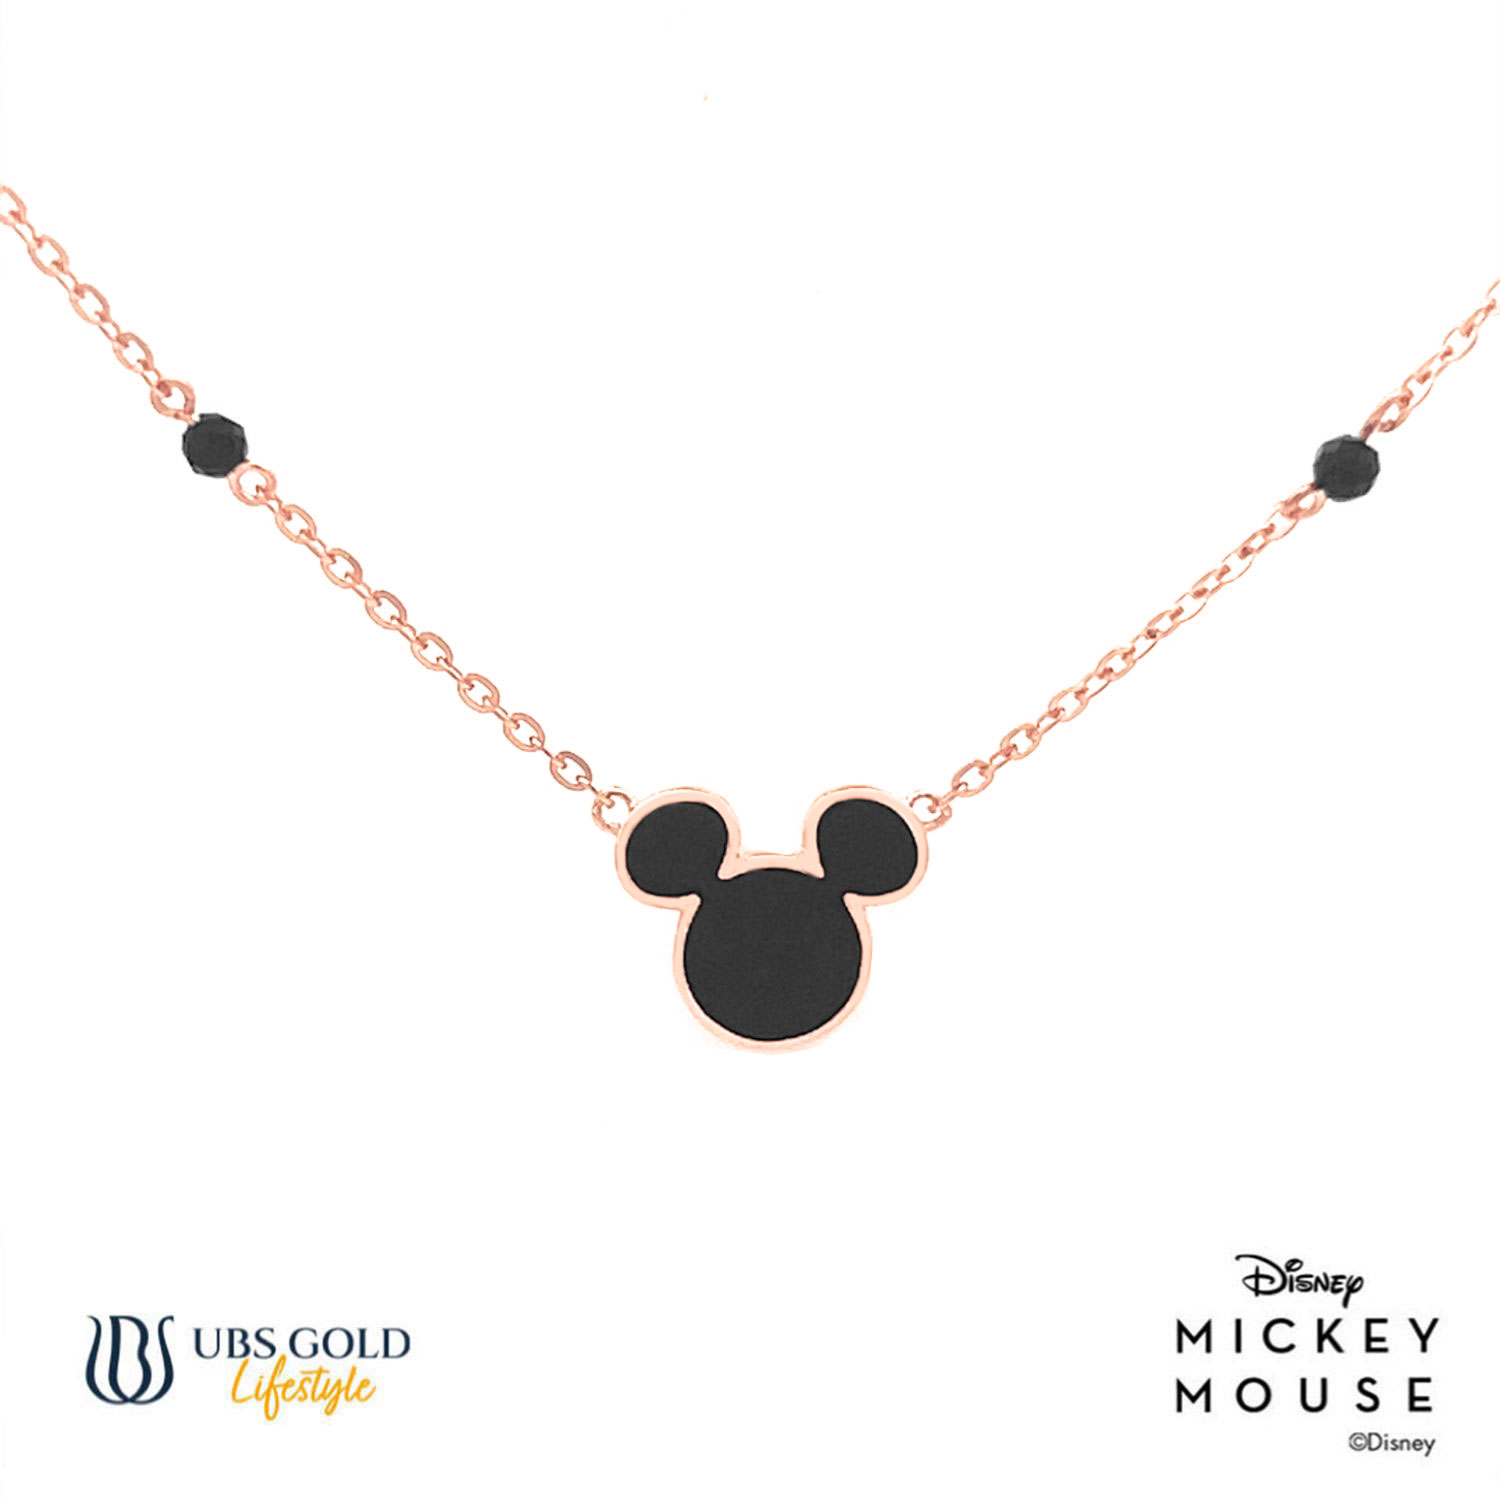 UBS Gold Kalung Emas Disney Mickey Mouse - Kky0476B - 17K